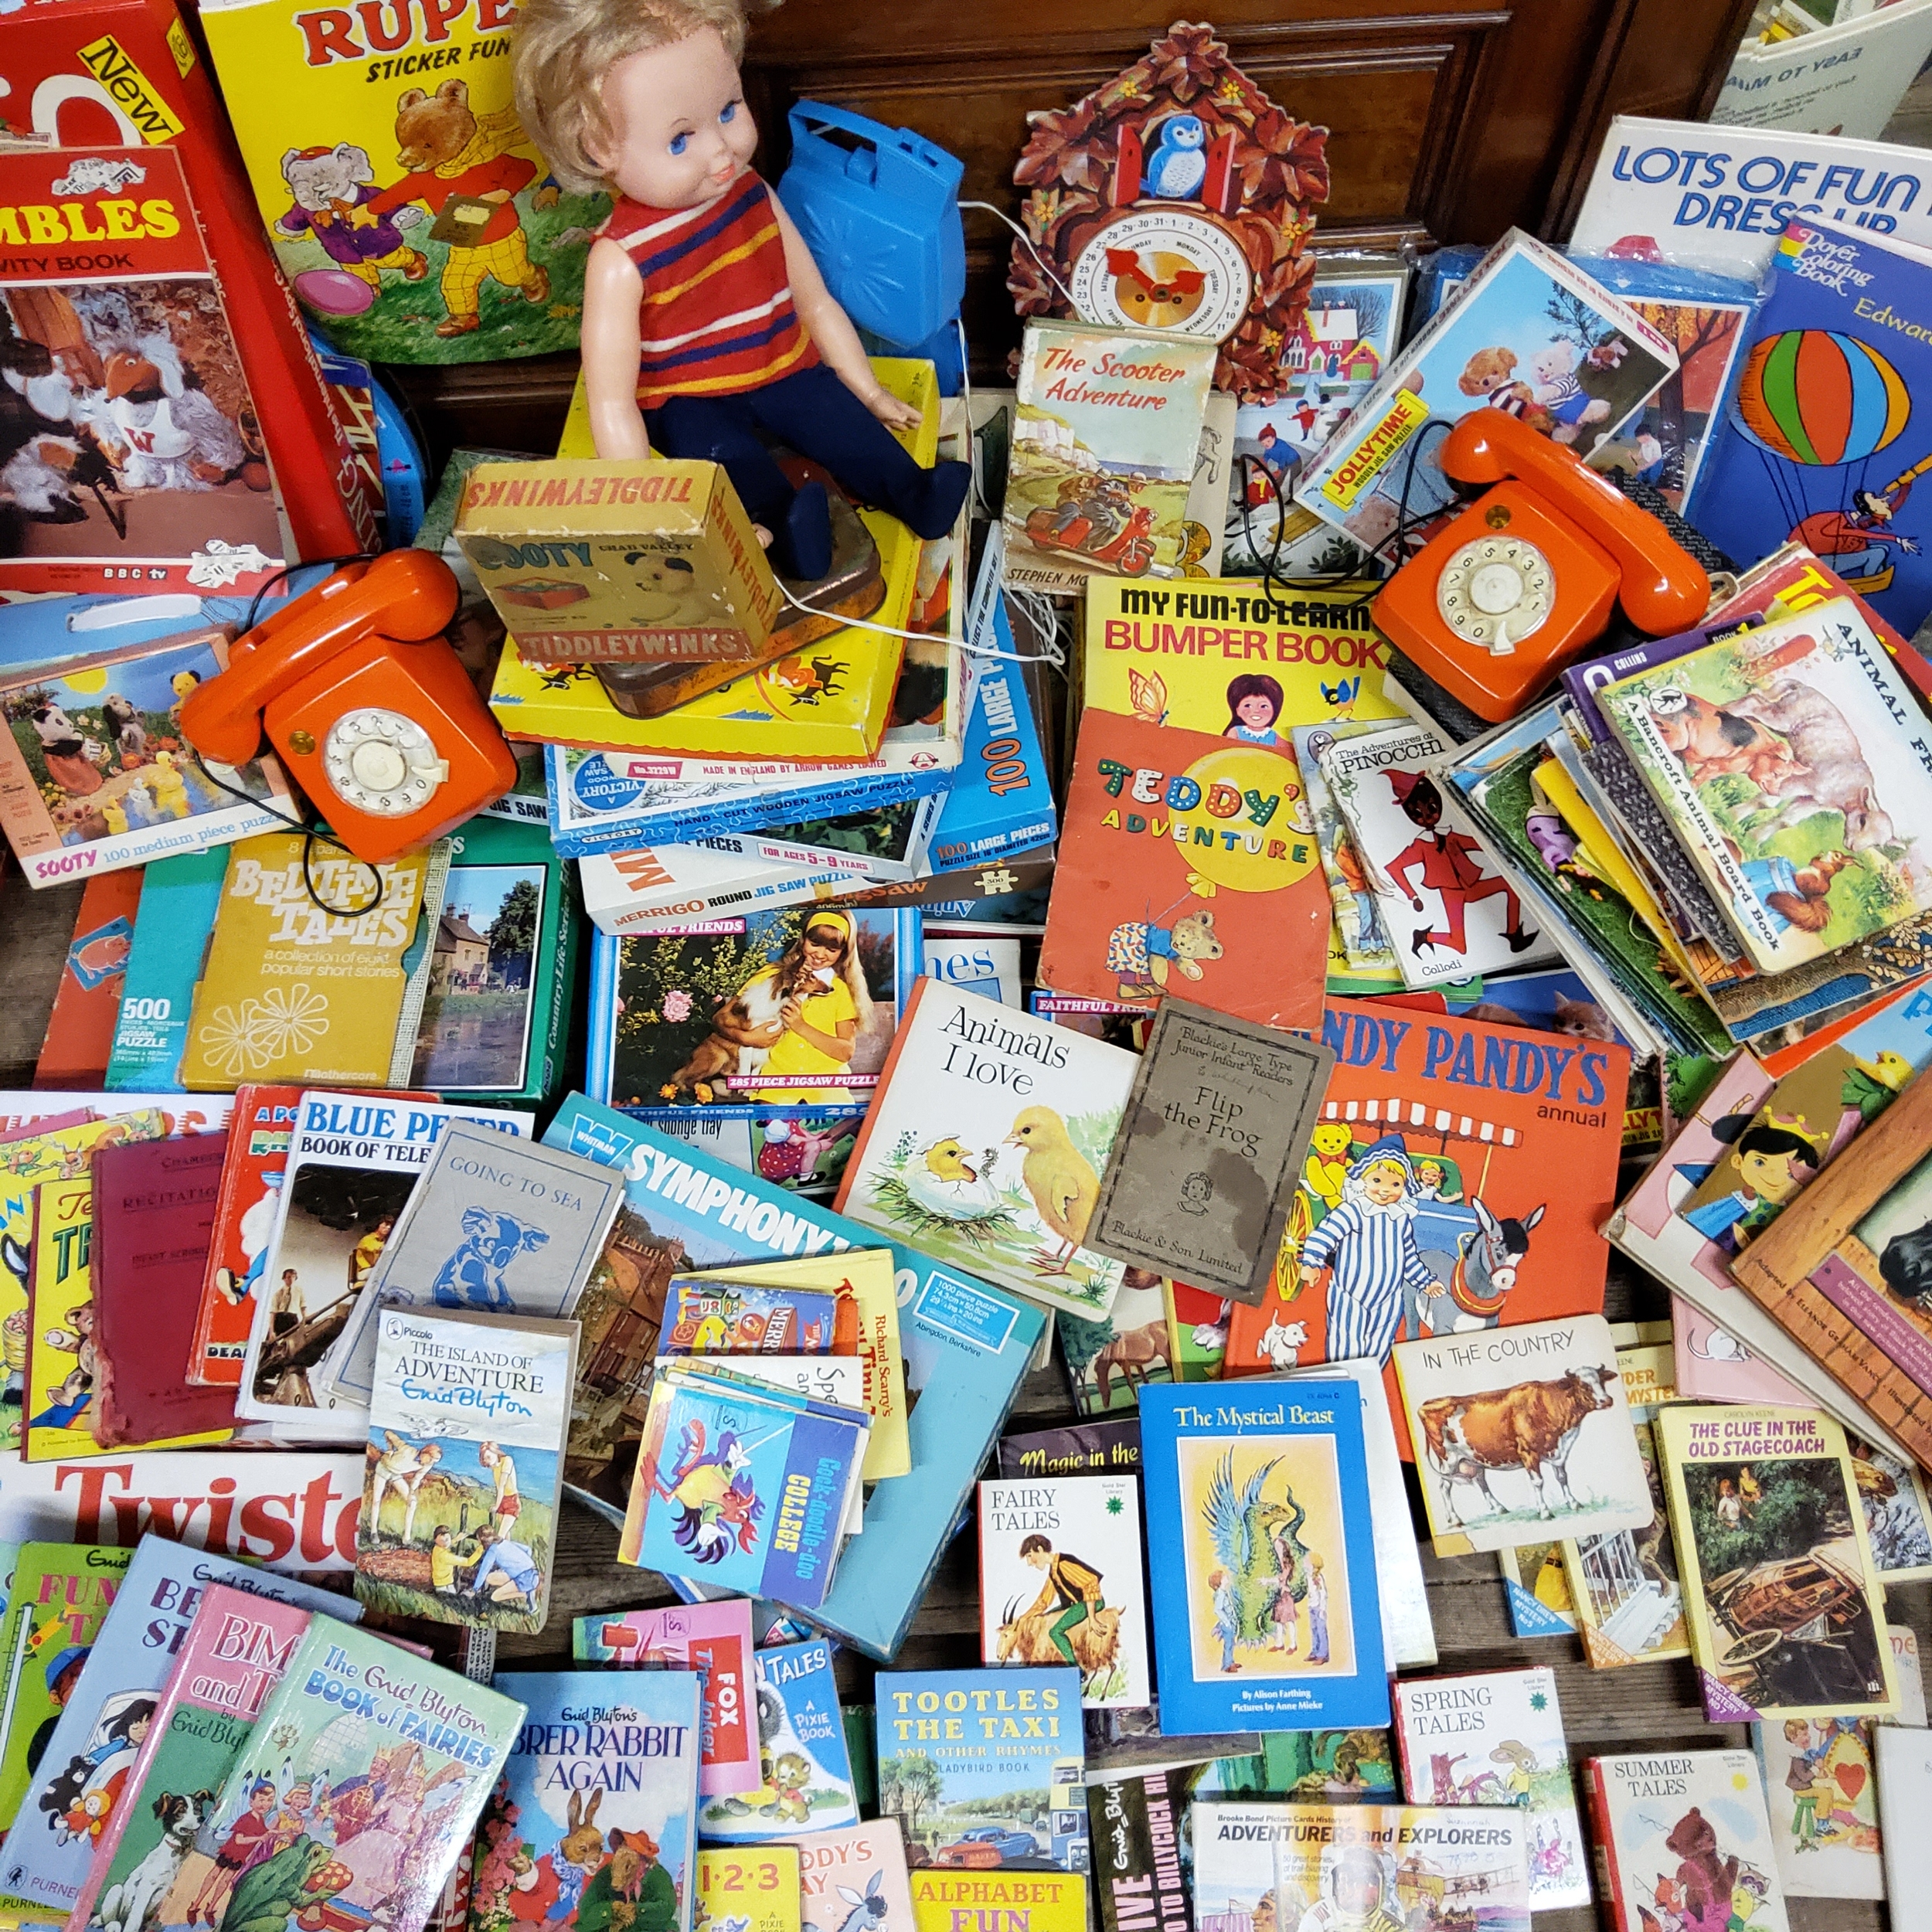 Toys & Vintage Juvenalia - 1970's children's books, jigsaws, dolls, toys including Enid Blyton - Image 2 of 4